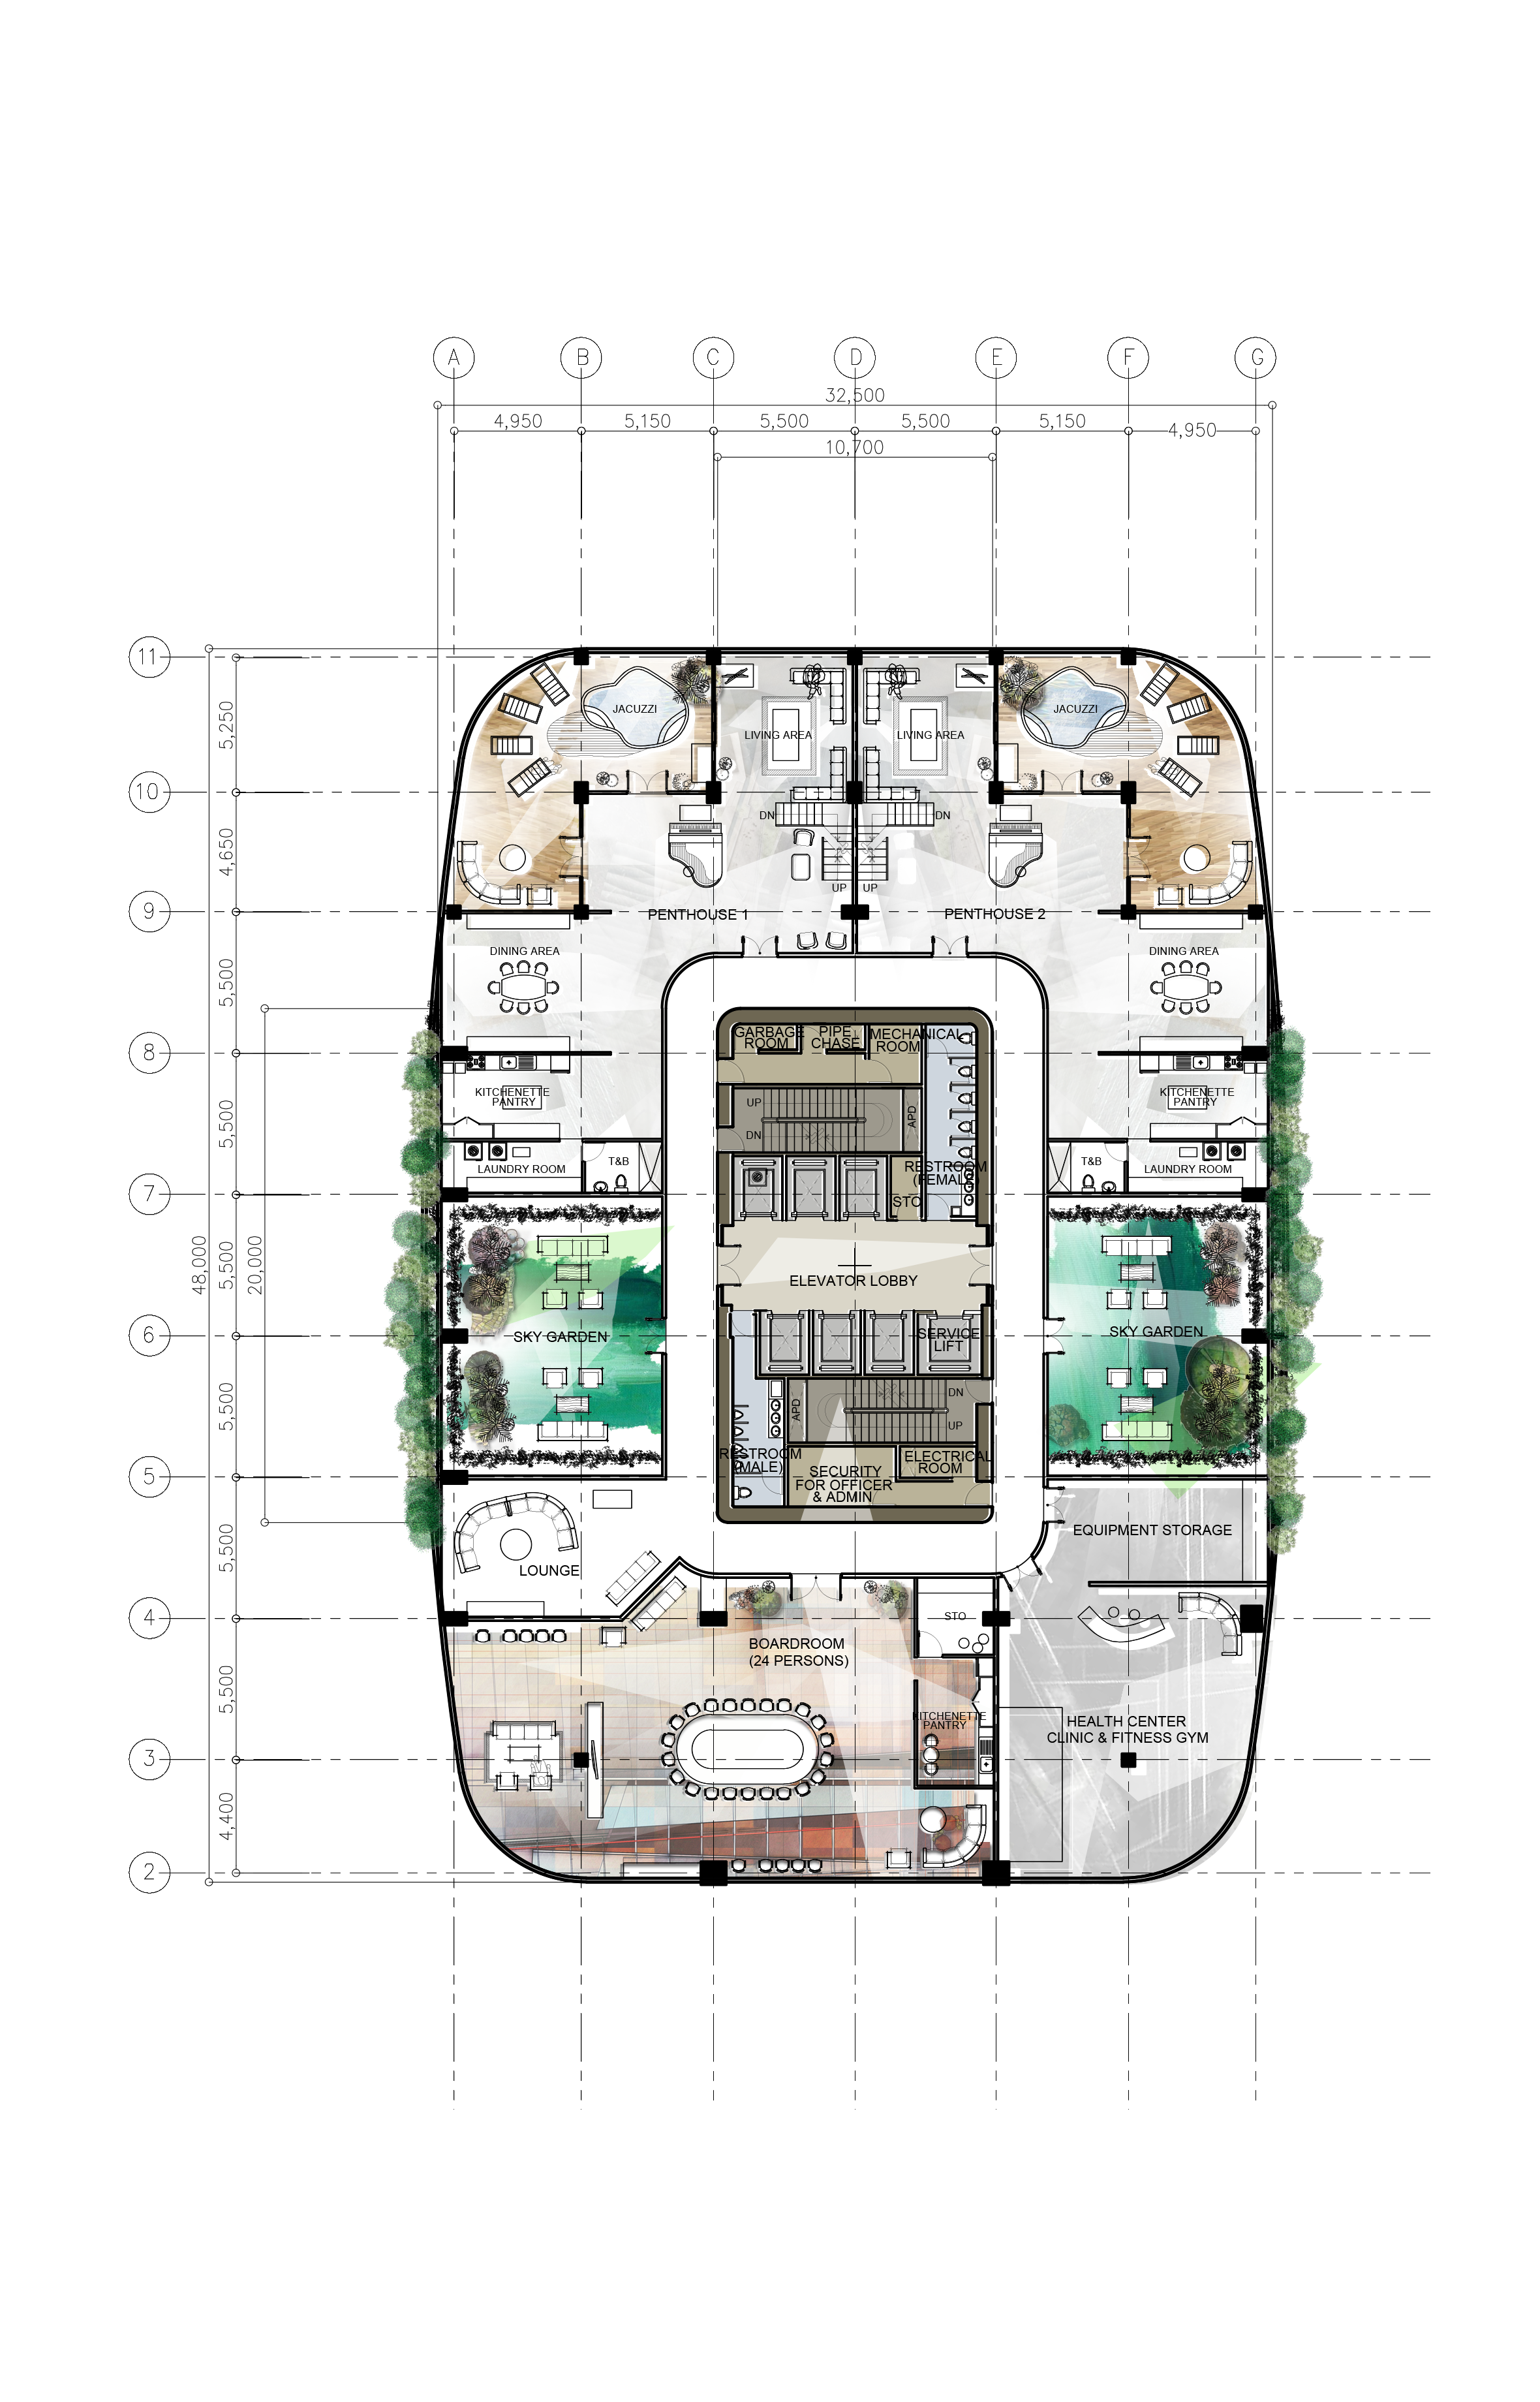 47th floor / Penthouse / Design 8 / Proposed Corporate